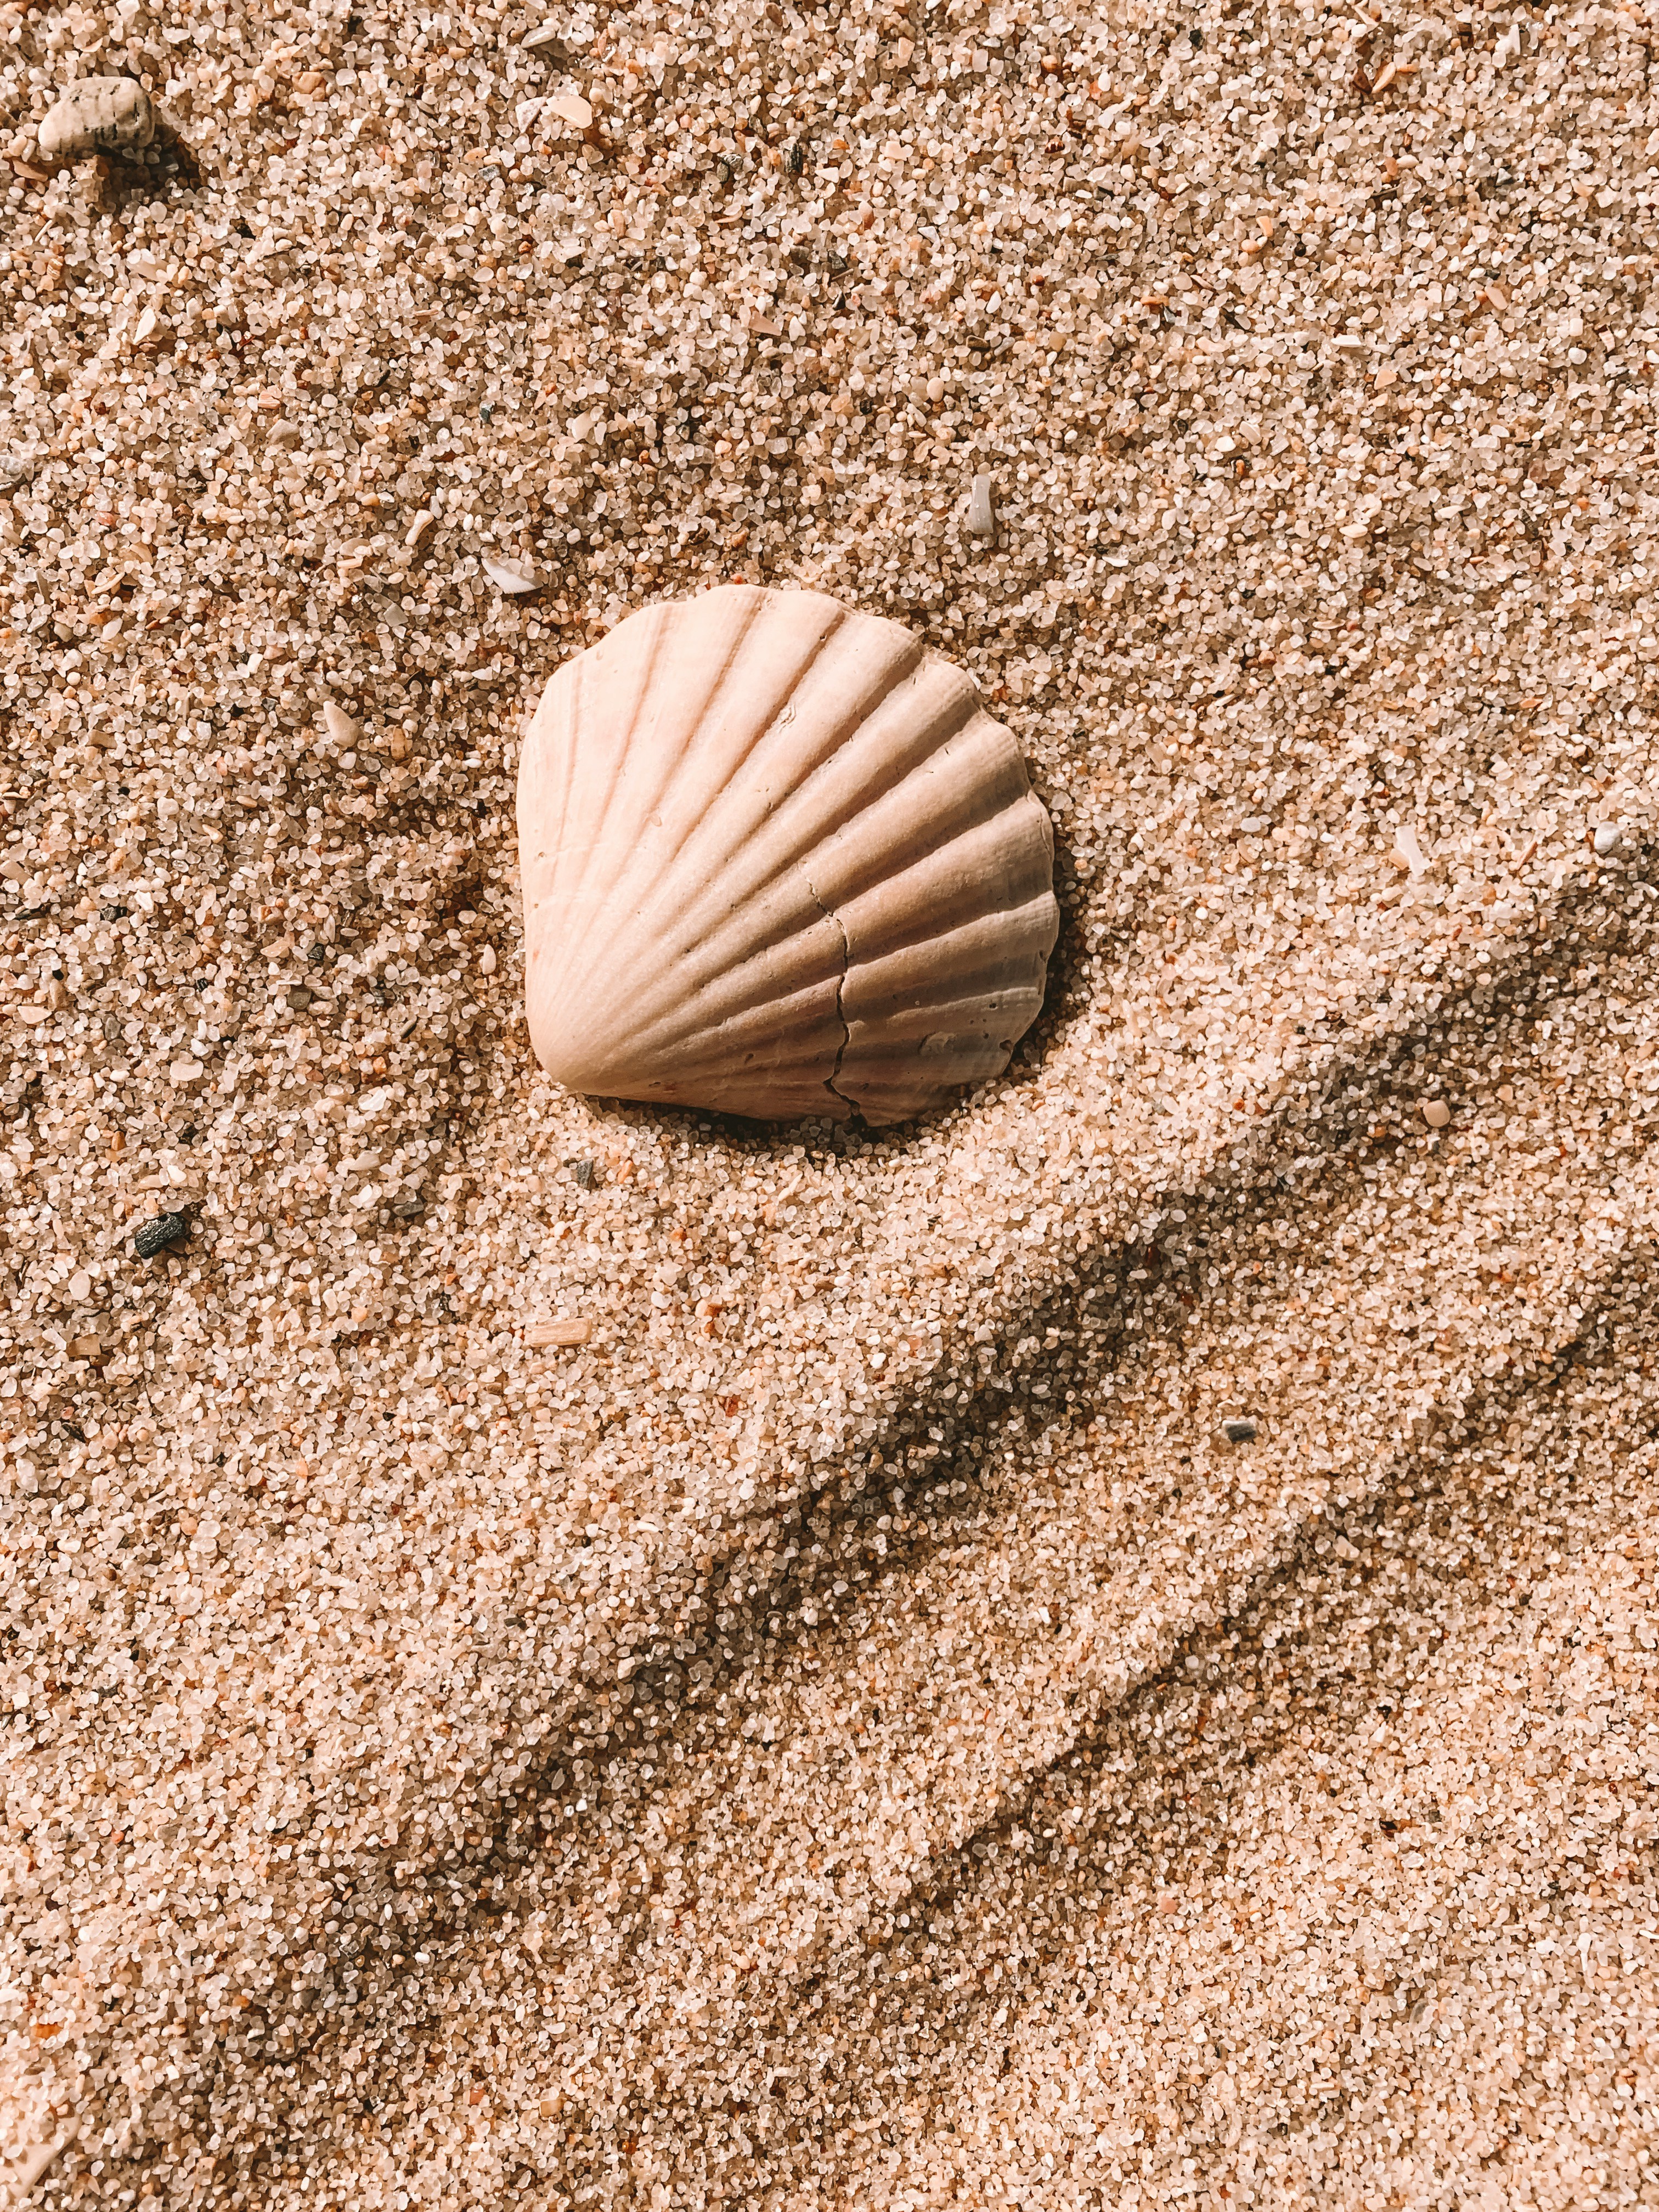 A seashell | Source: Unsplash